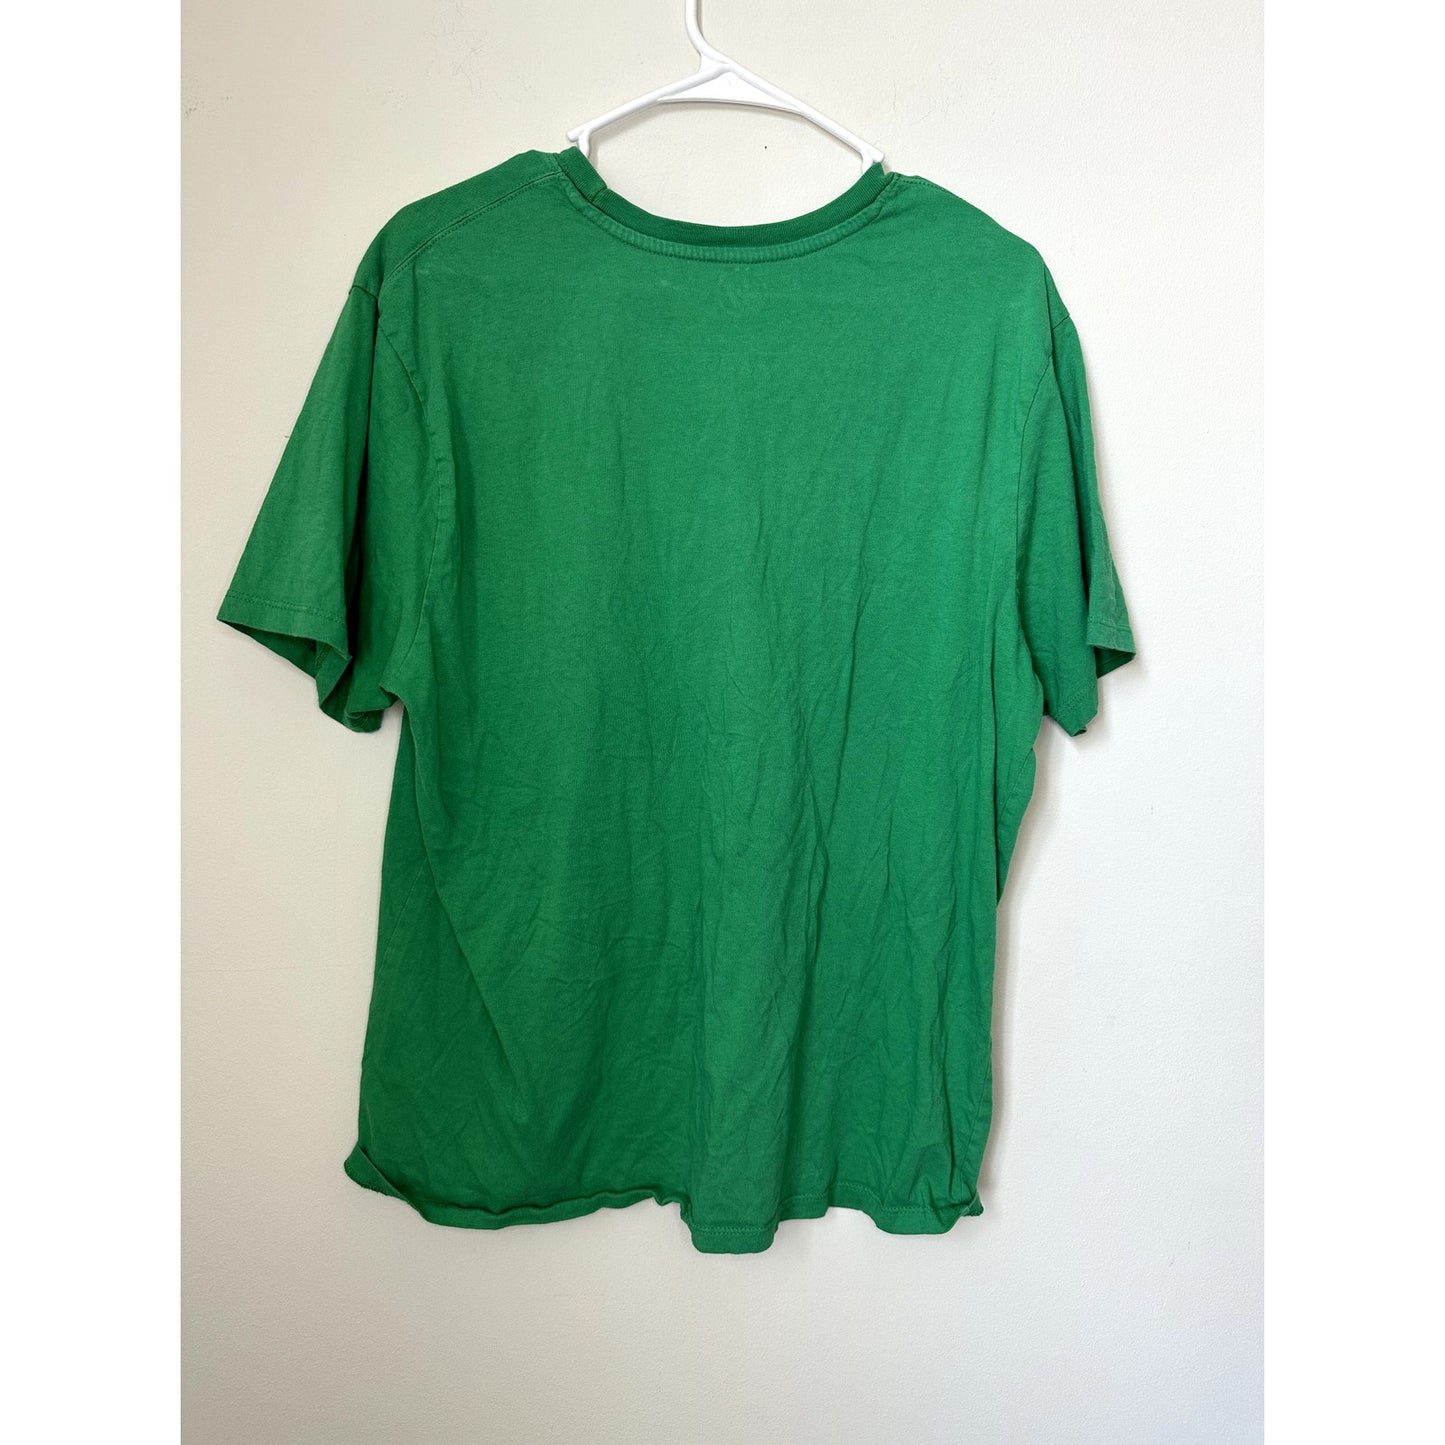 Boston Celtics Graphic T-shirt, Size XL